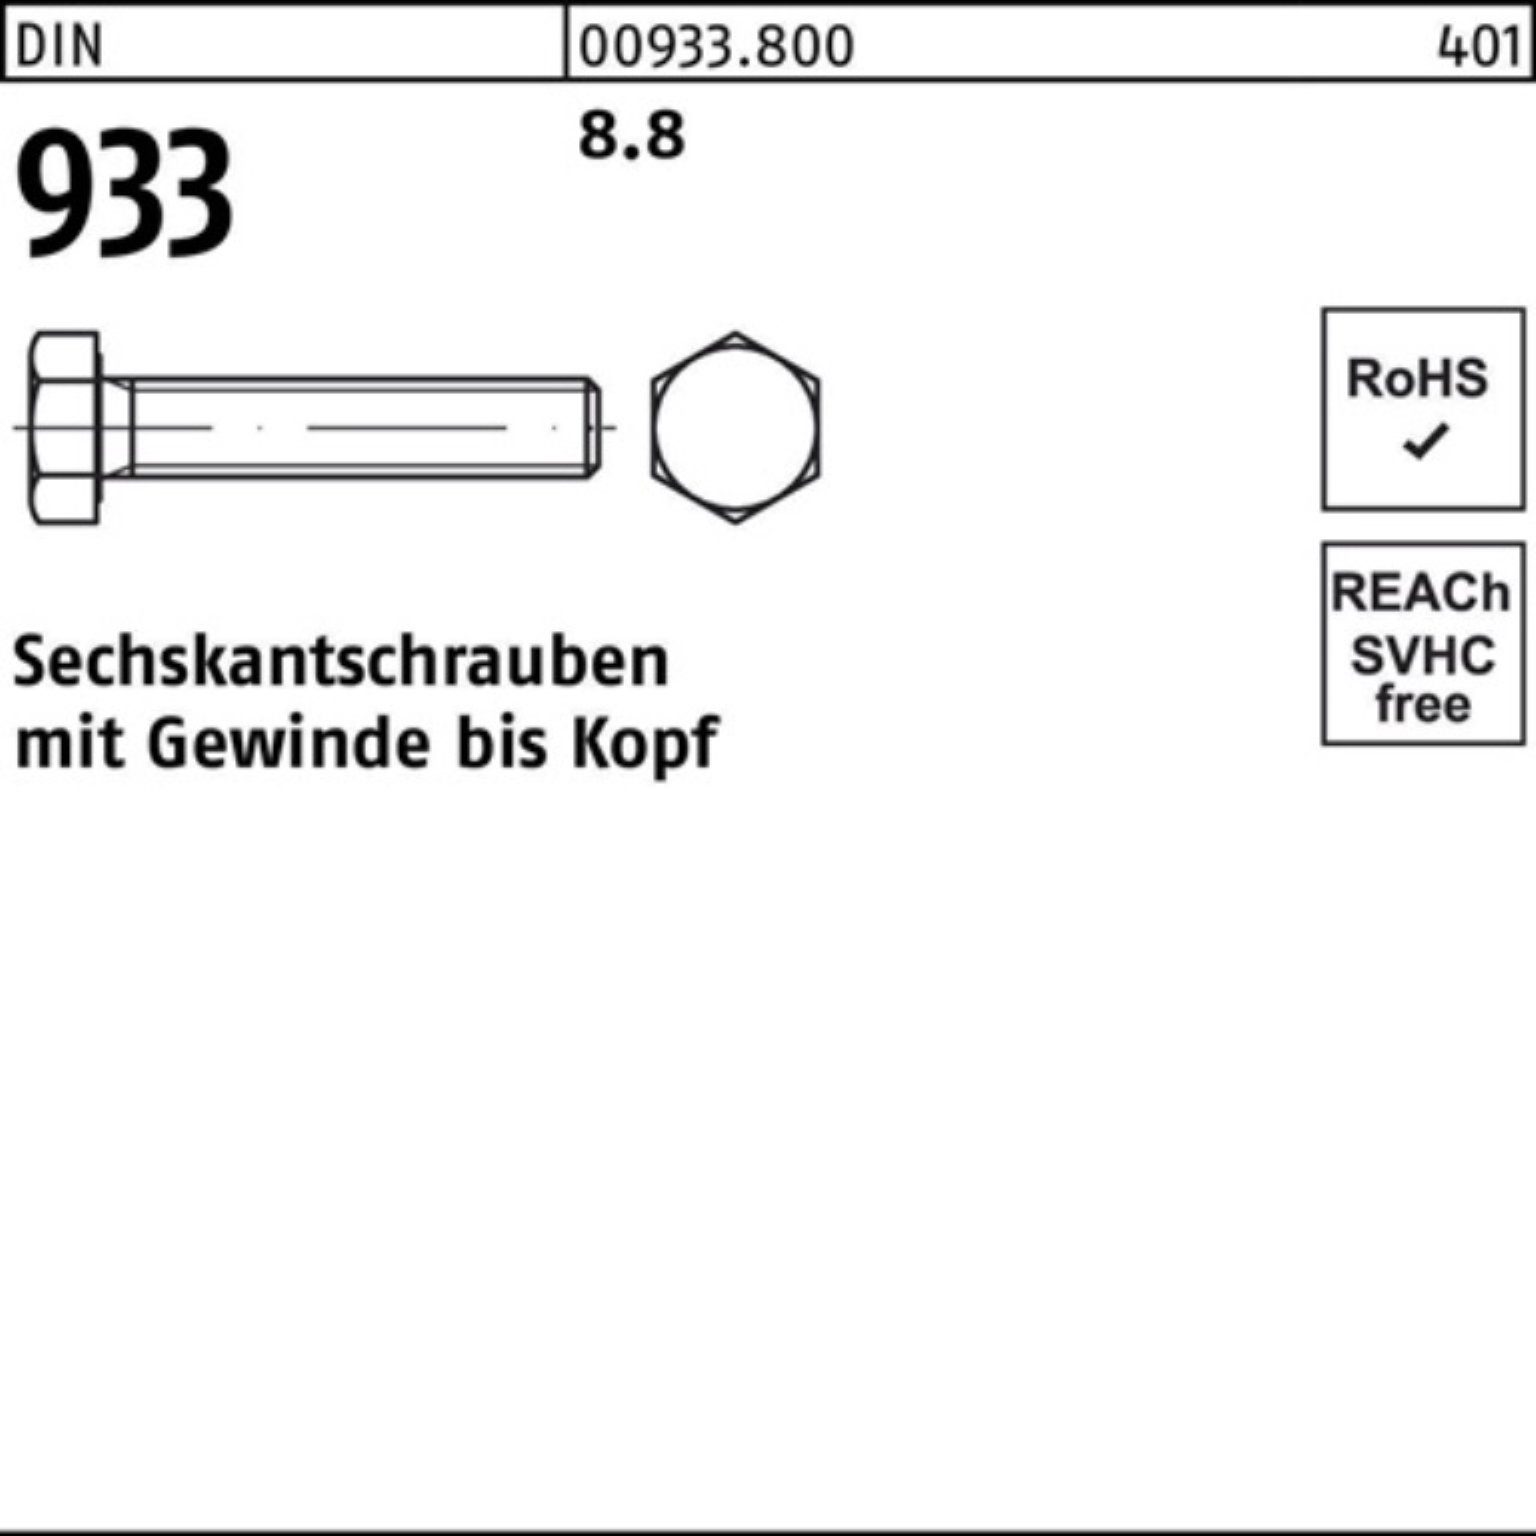 Reyher Sechskantschraube 100er Pack 100 DIN 20 933 M5x VG 933 Stück DIN 8.8 Sechskantschraube